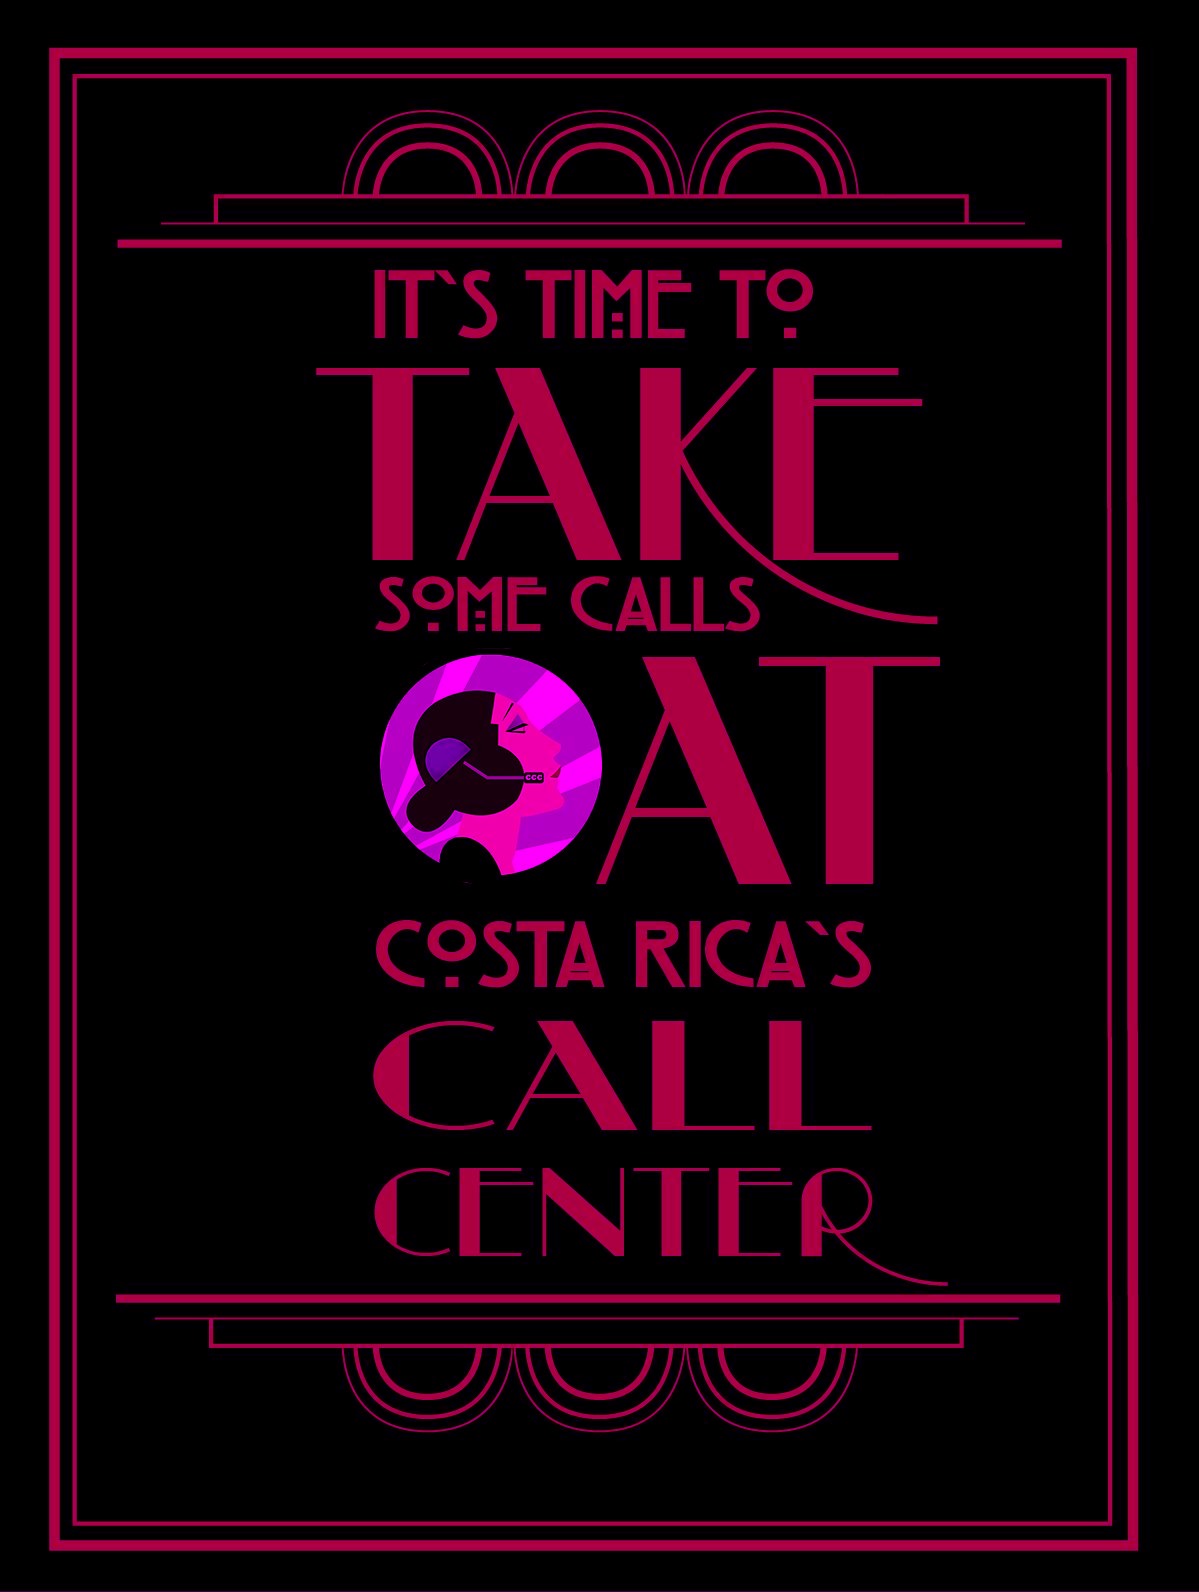 CALL CENTRE SHIPPING DEPARTMENT COSTA RICA.jpg  by richardblank